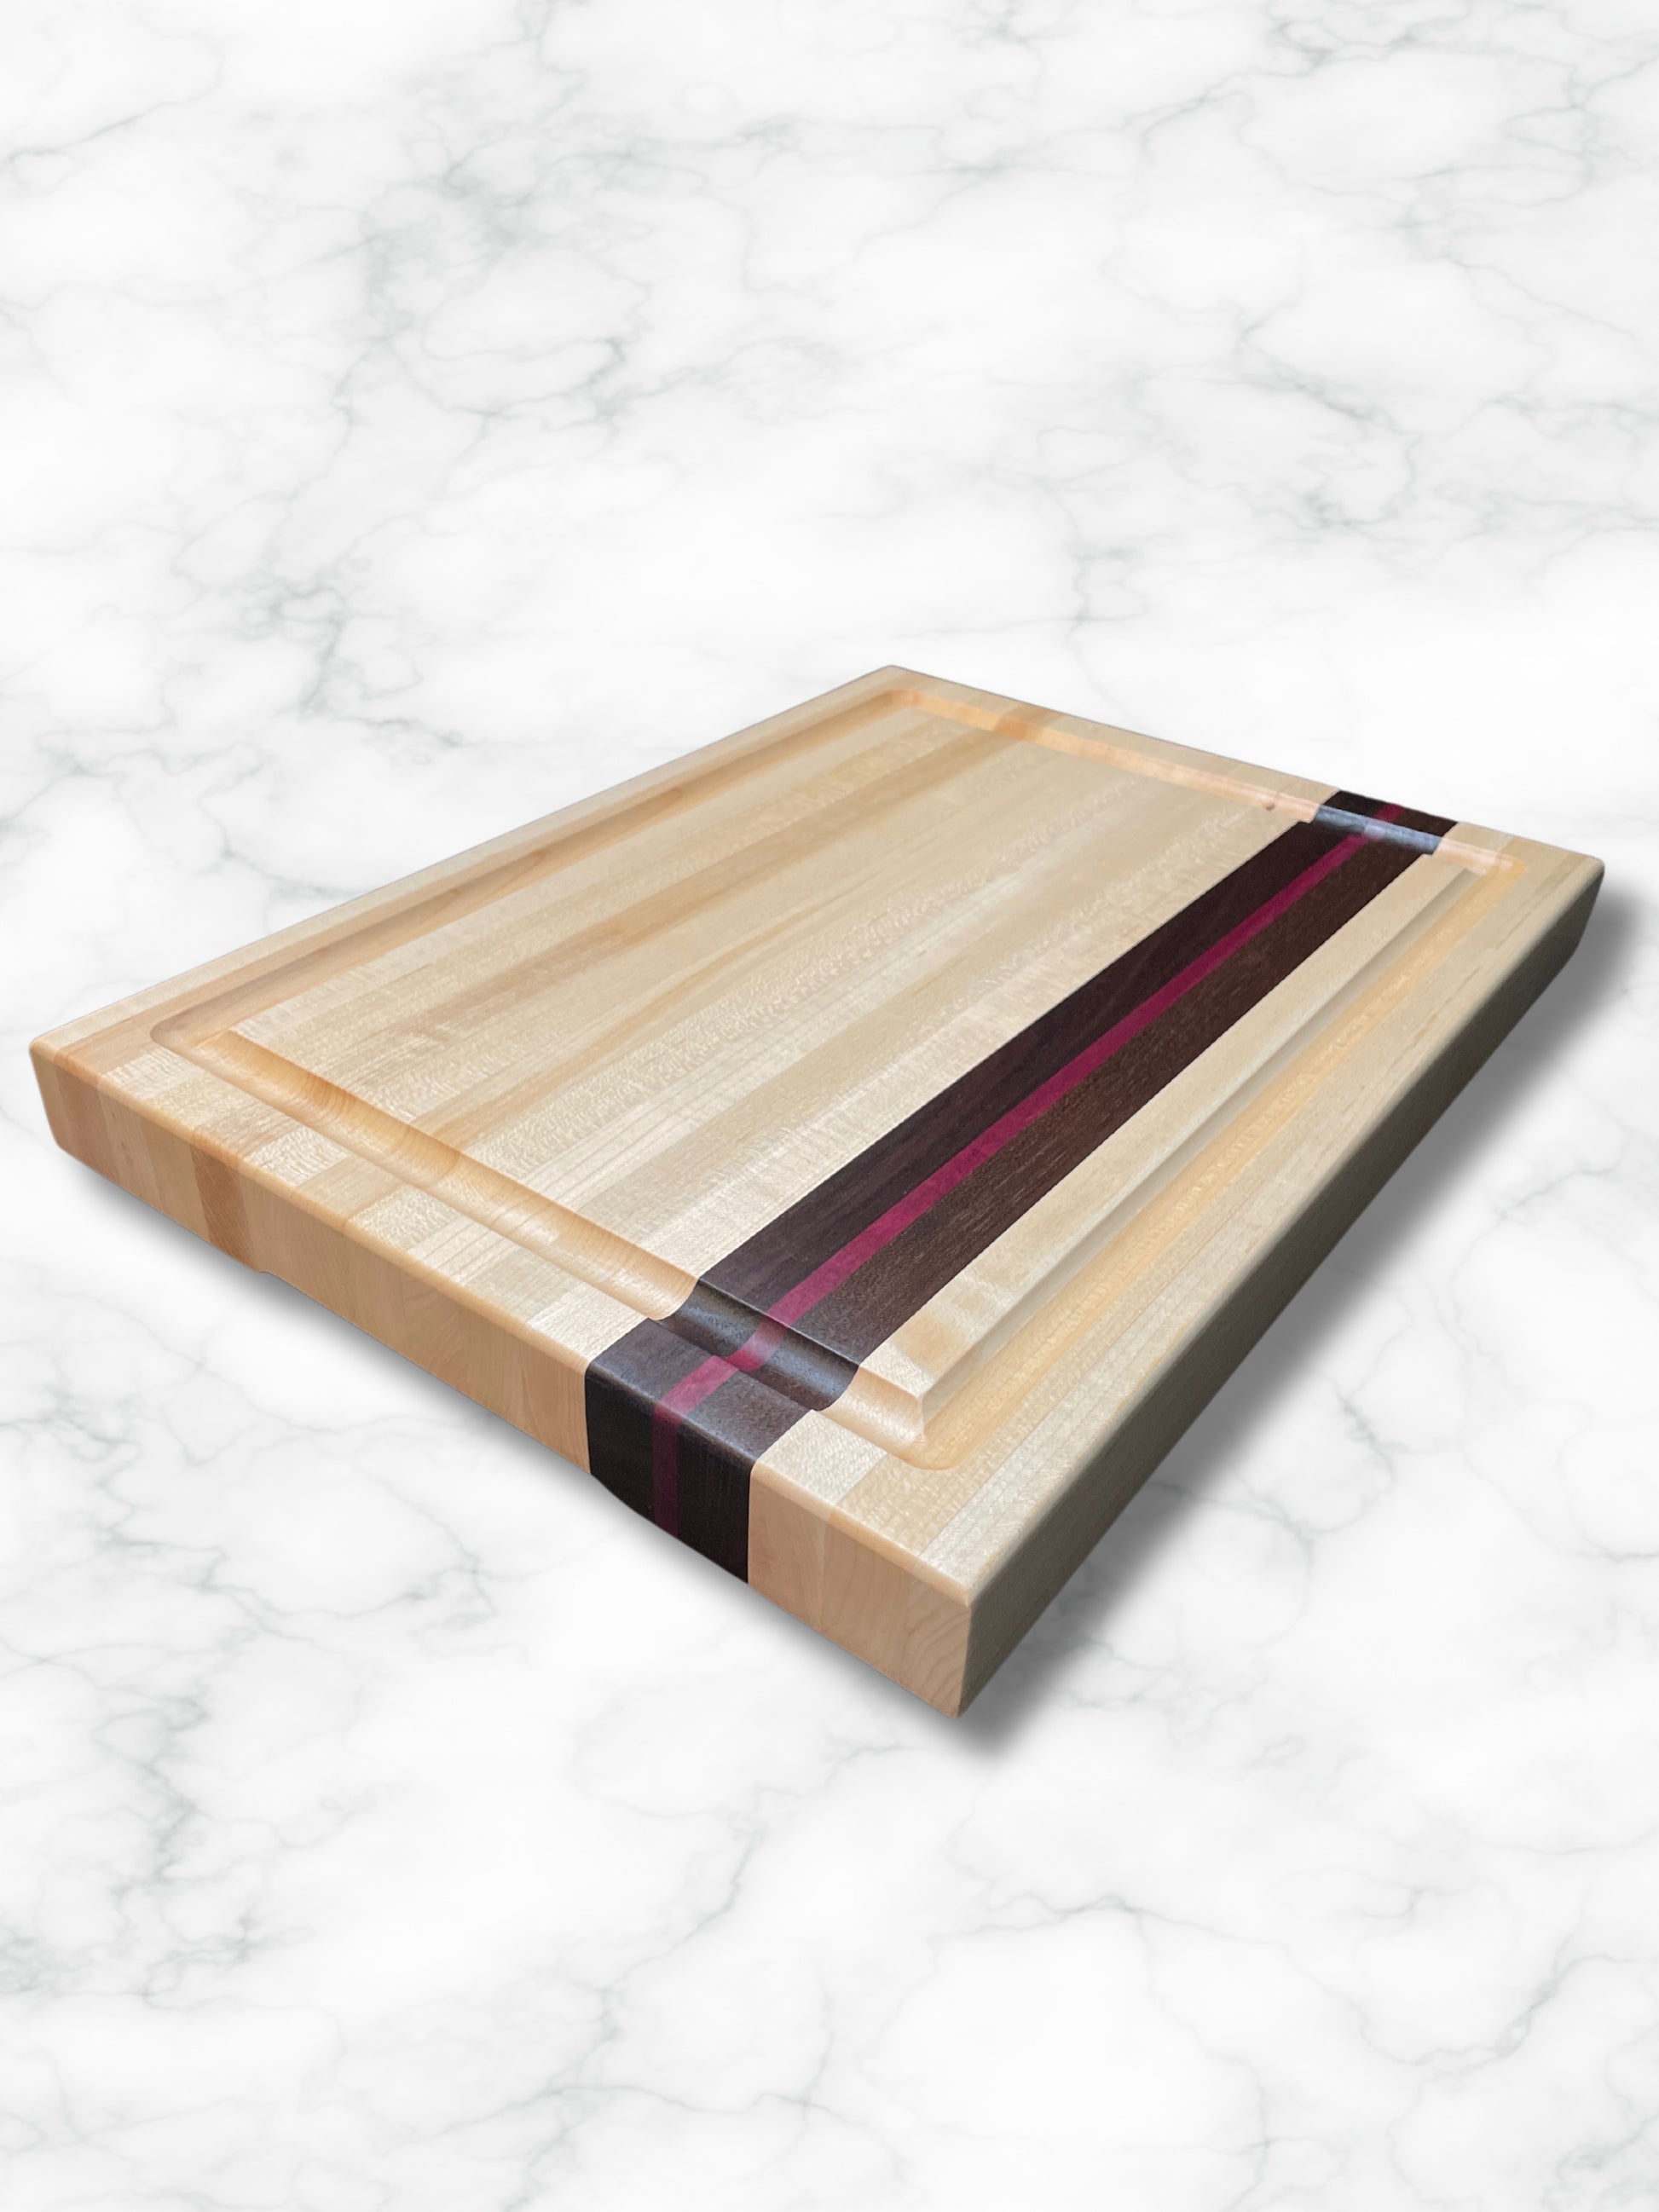 custom handmade edge grain cutting board wood maple walnut purpleheart, side view